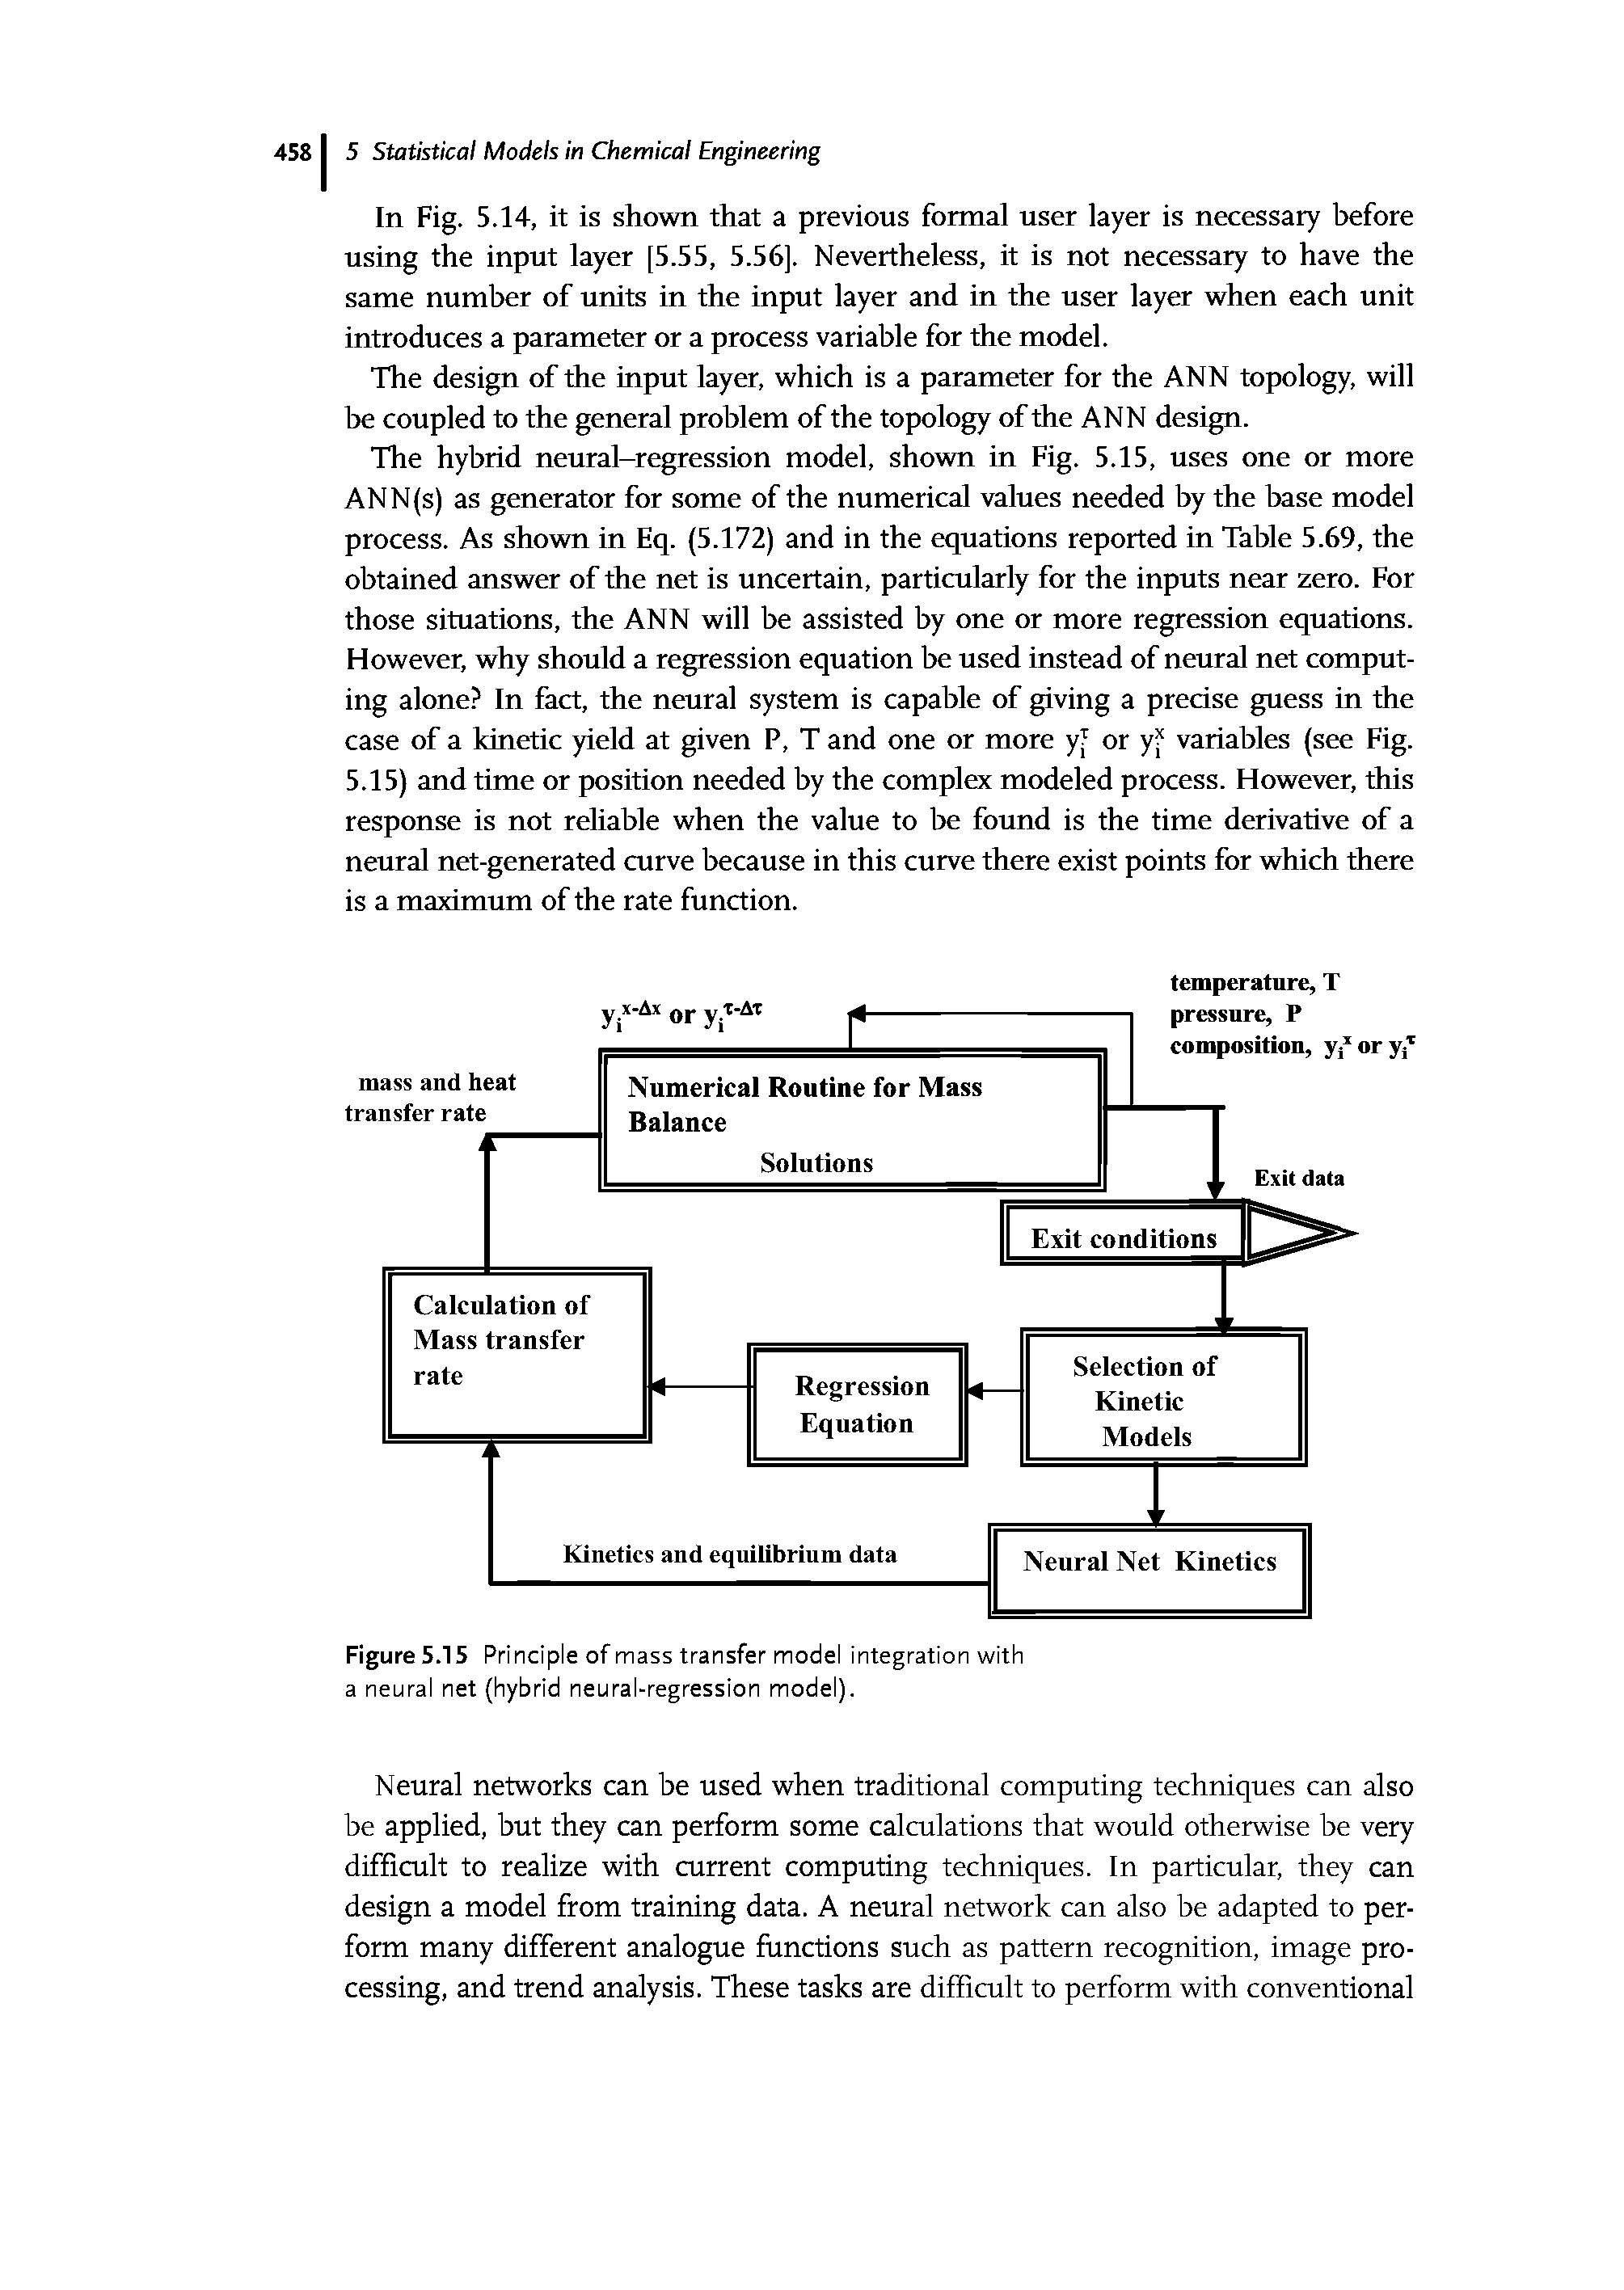 Figure 5.15 Principle of mass transfer model integration with a neural net (hybrid neural-regression model).